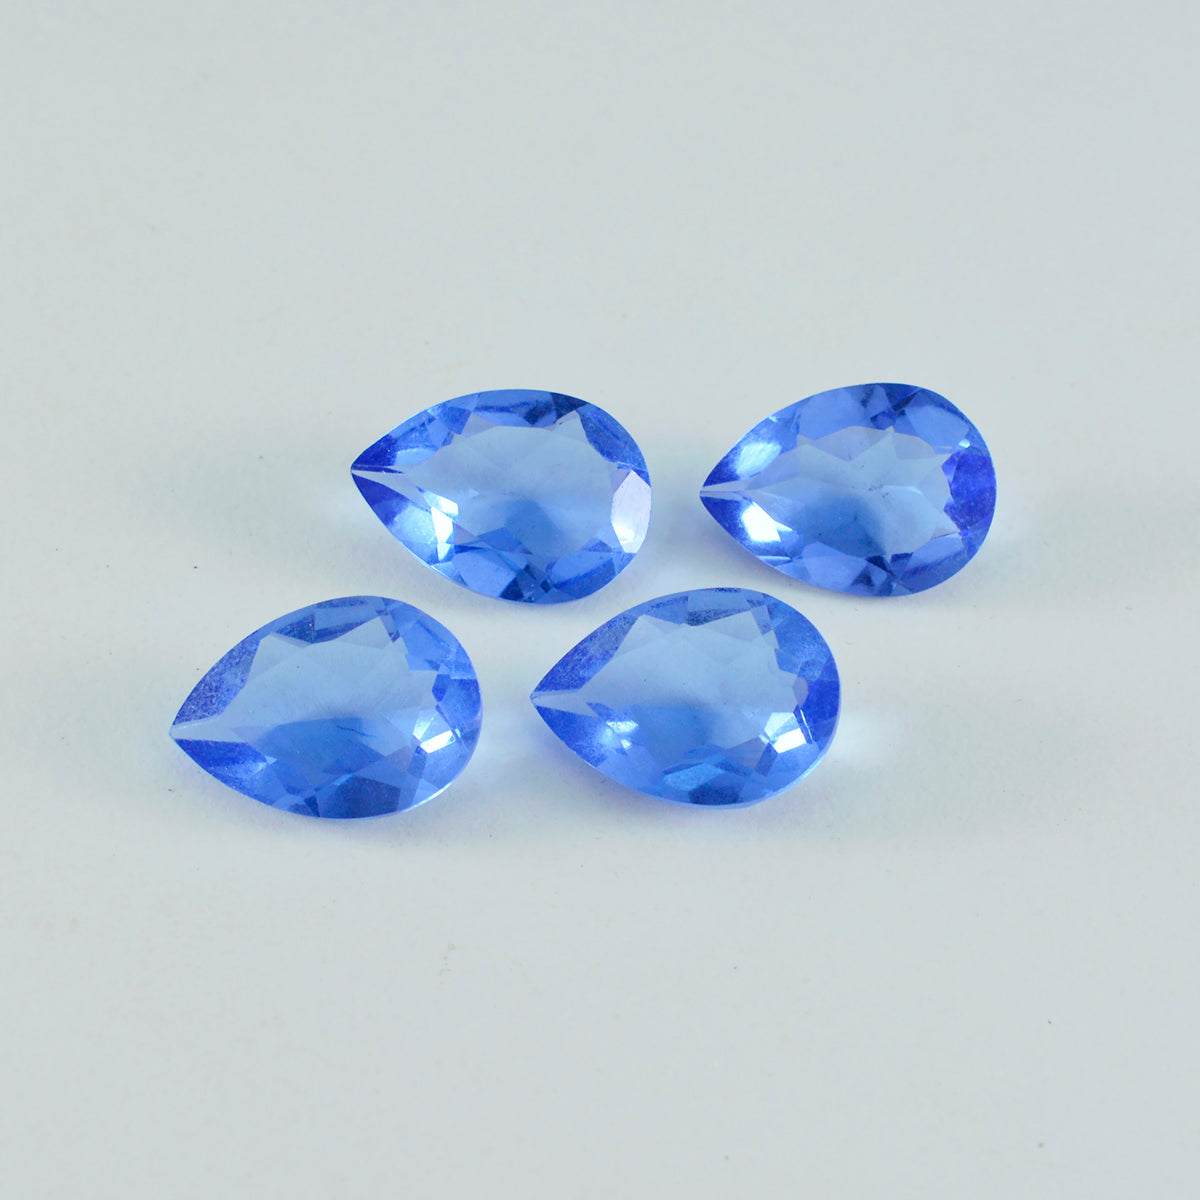 Riyogems 1PC Blue Sapphire CZ Faceted 10x14 mm Pear Shape lovely Quality Loose Gems